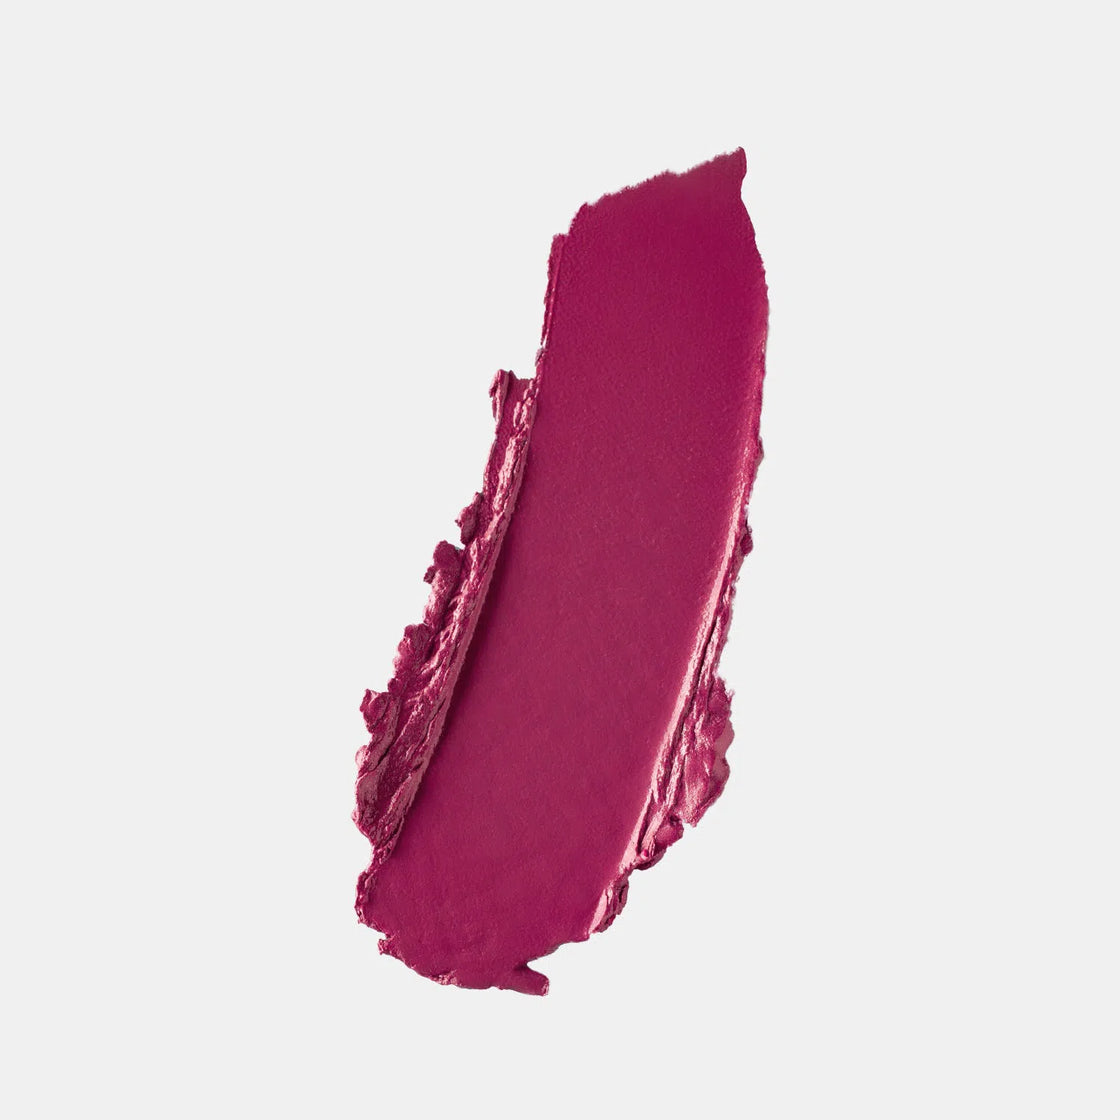 Crayberry - Blush Stick-cruelty free cosmetics-Sunny Leone